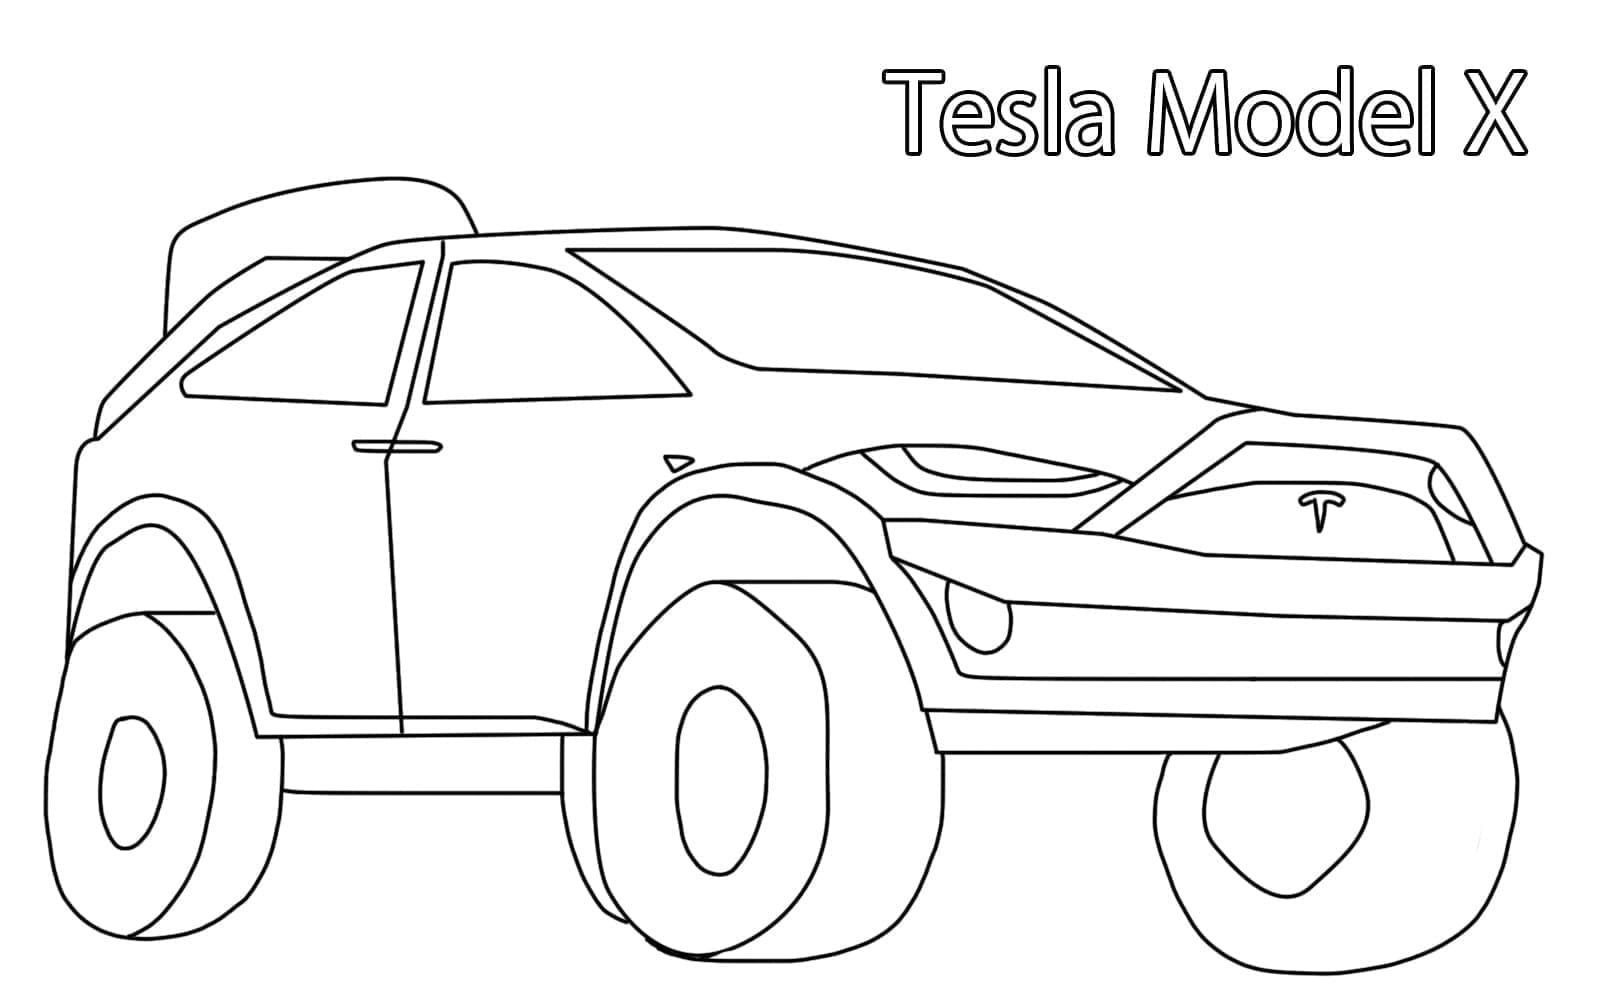 Tesla roadster coloring page